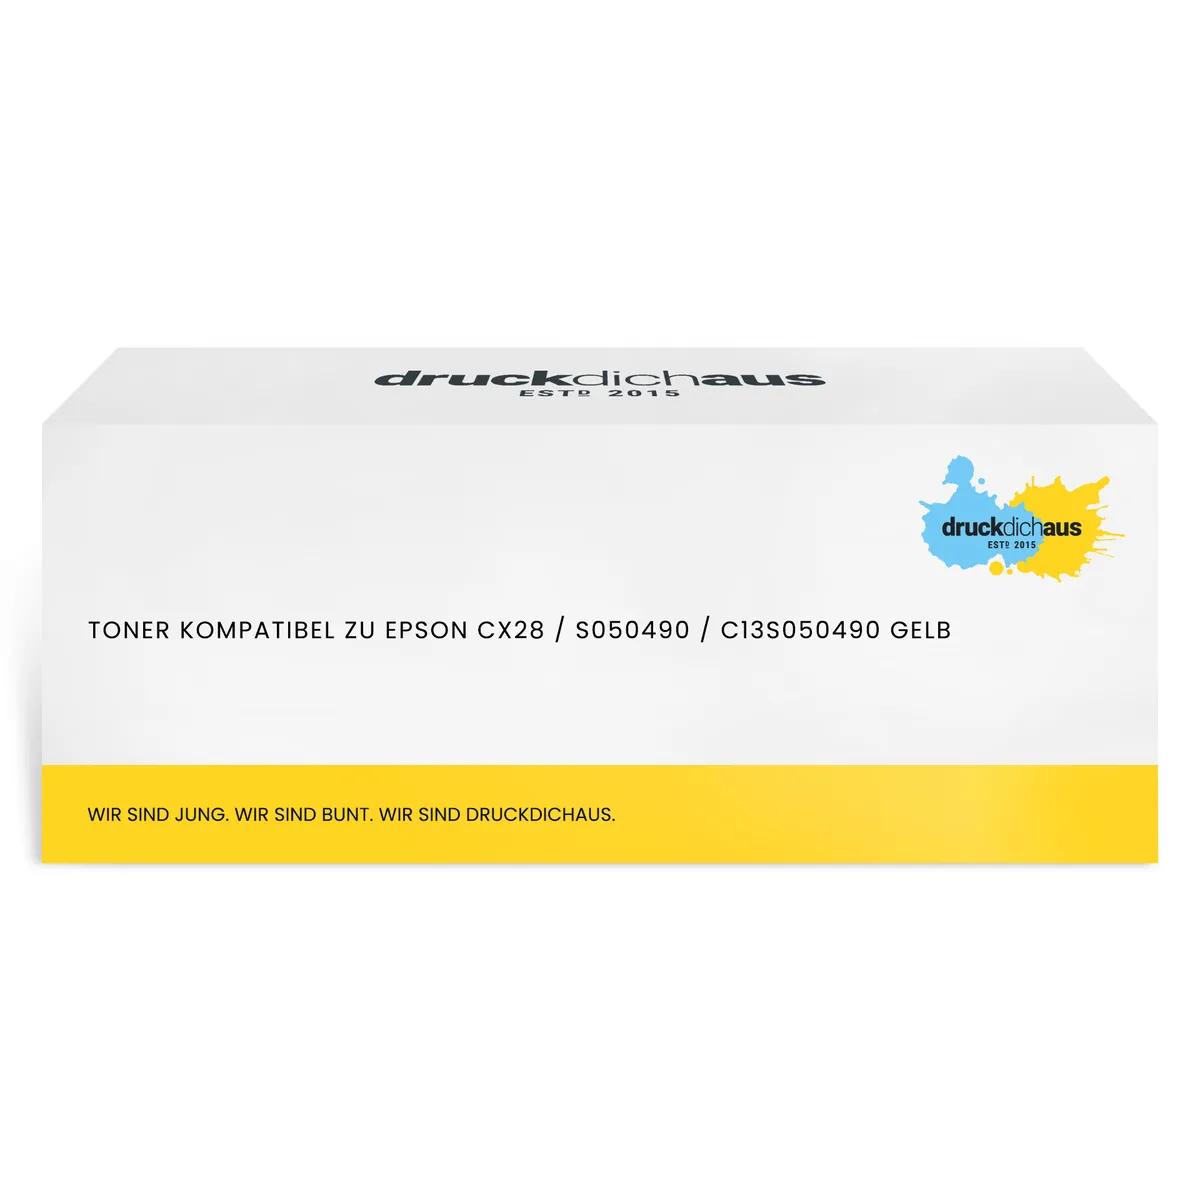 Toner kompatibel zu Epson CX28 / S050490 / C13S050490 gelb